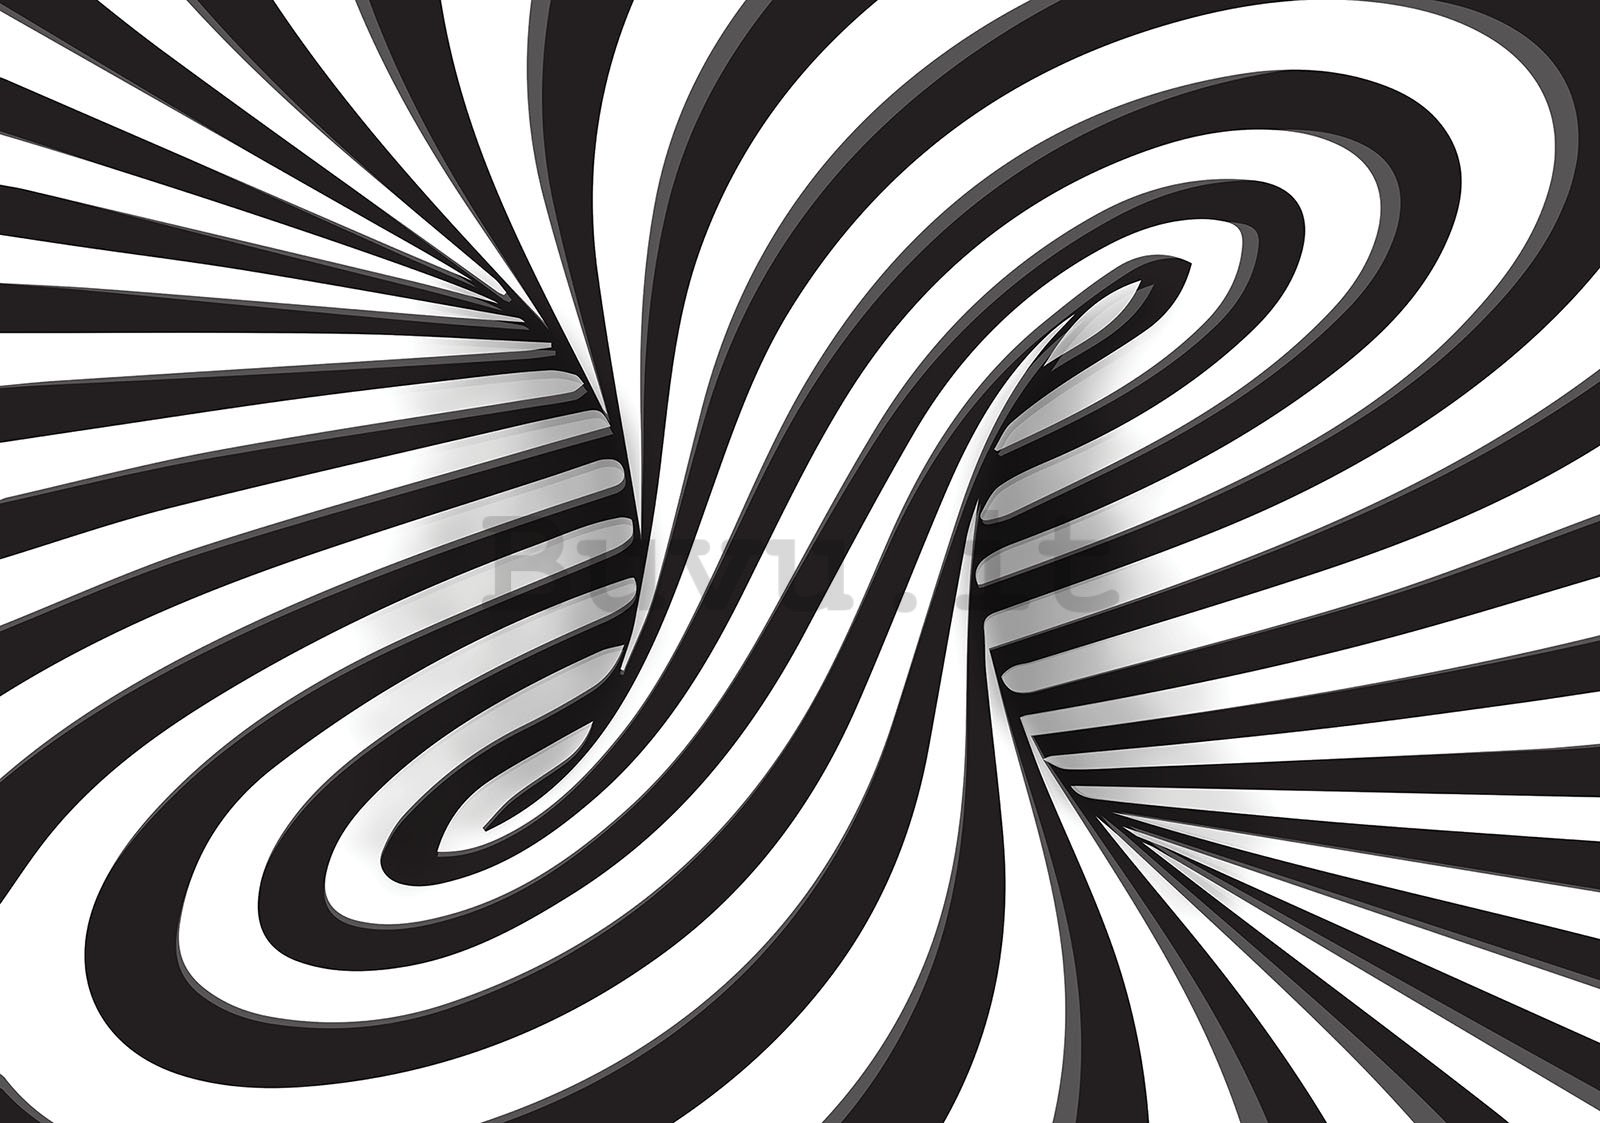 Fotomurale: Illusione a strisce (1) - 254x92 cm